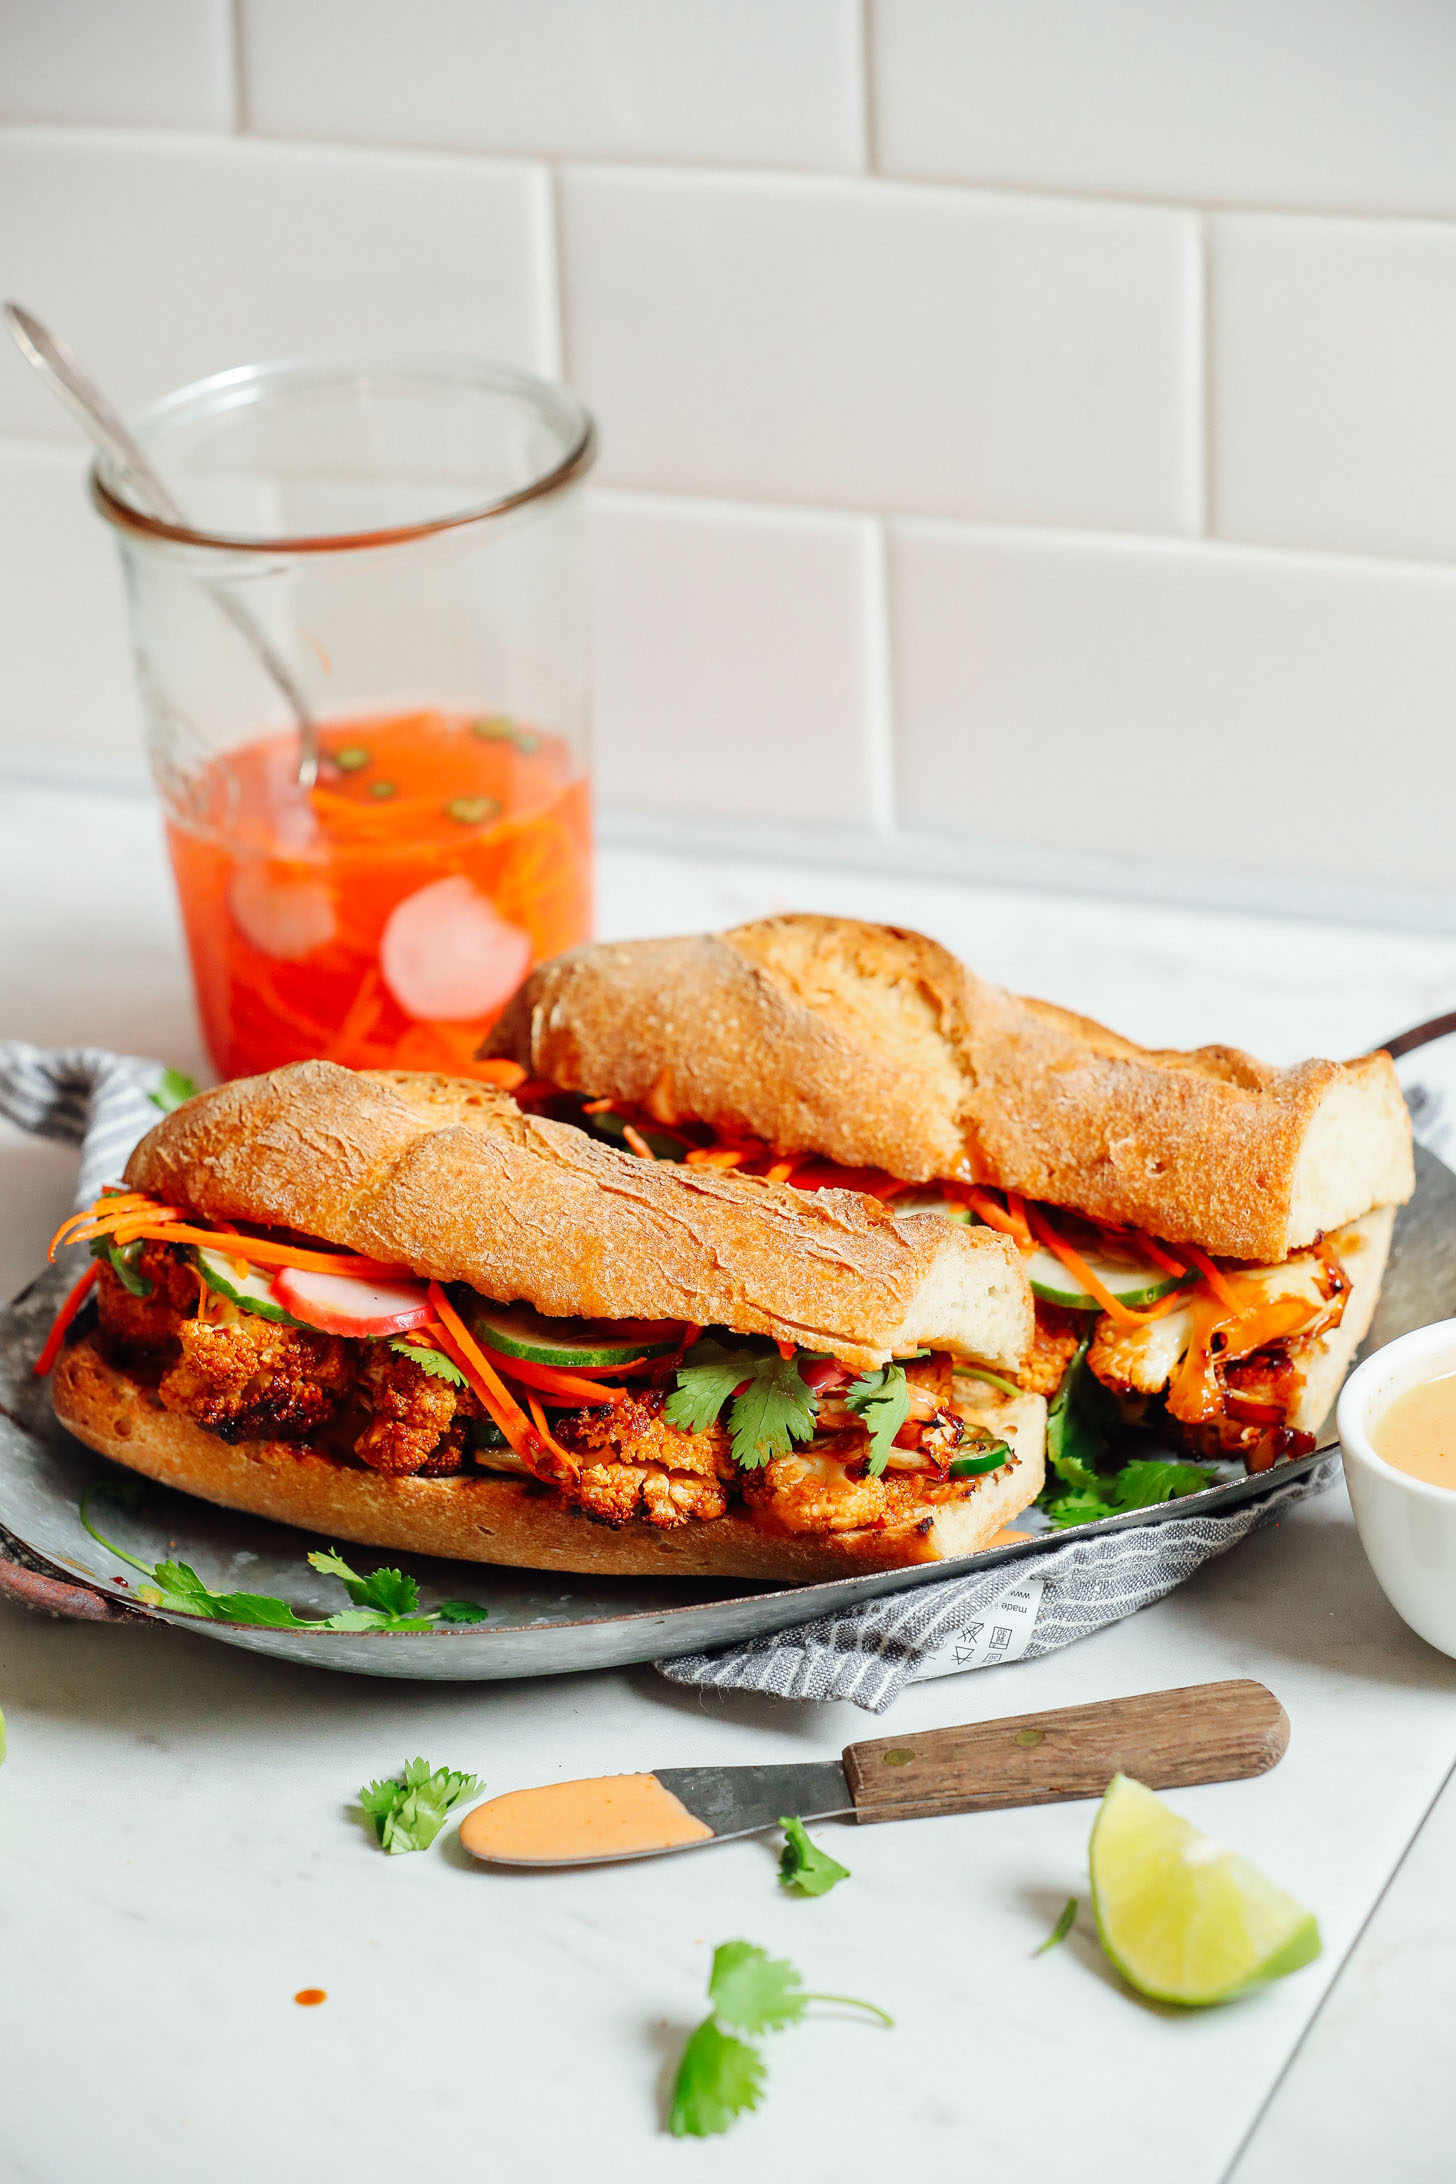 Plate displaying two gluten-free vegan Cauliflower Banh Mi sandwiches